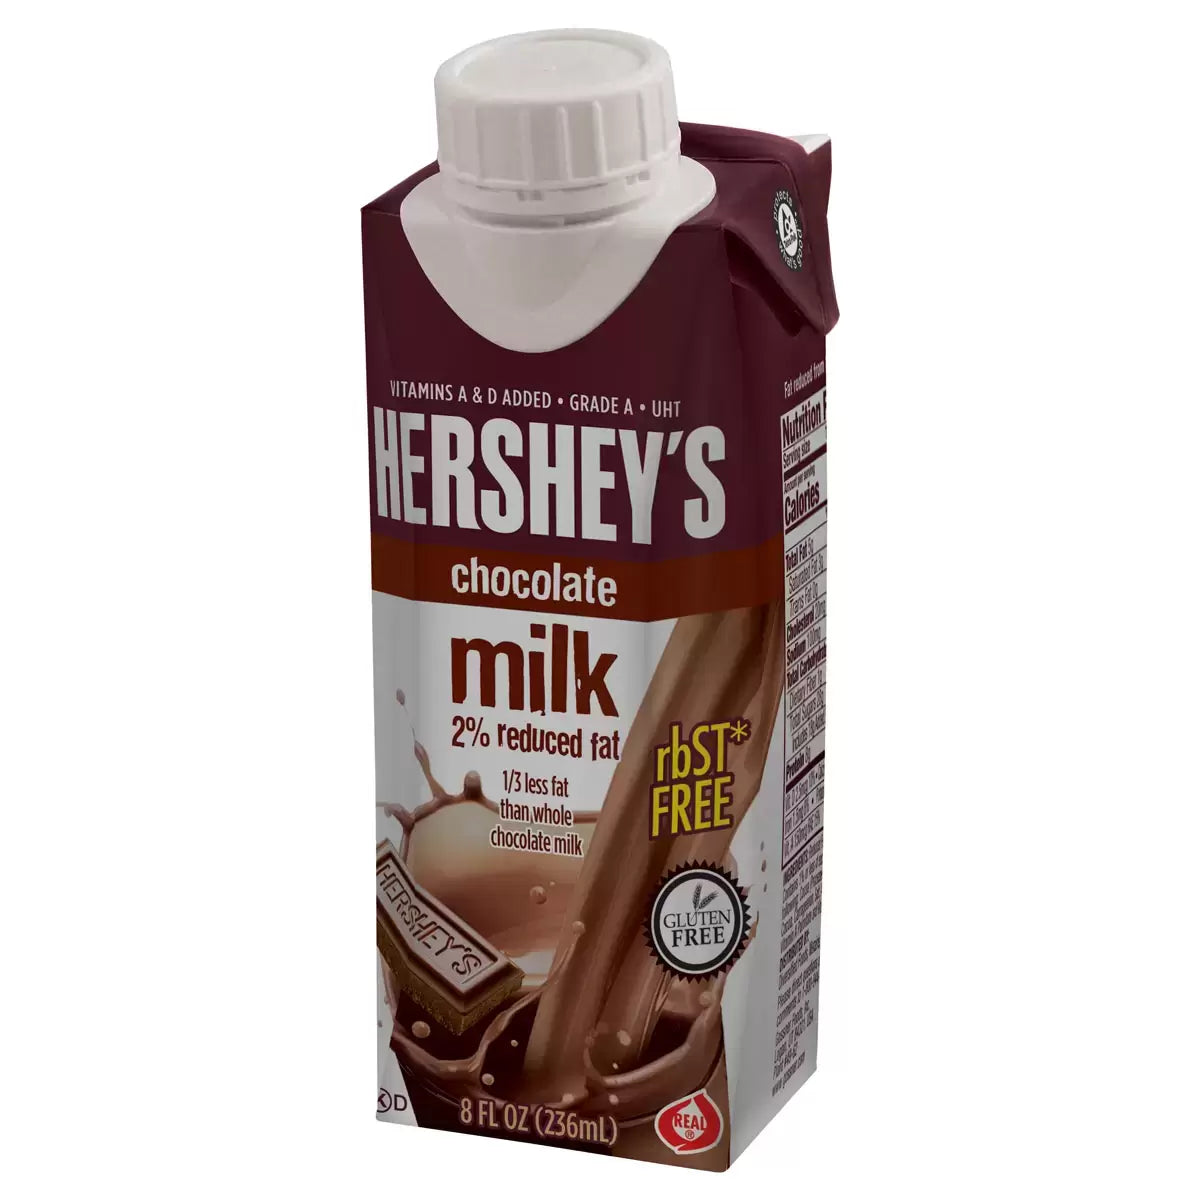 Hershey's Chocolate Milk Drink, 18 x 236ml